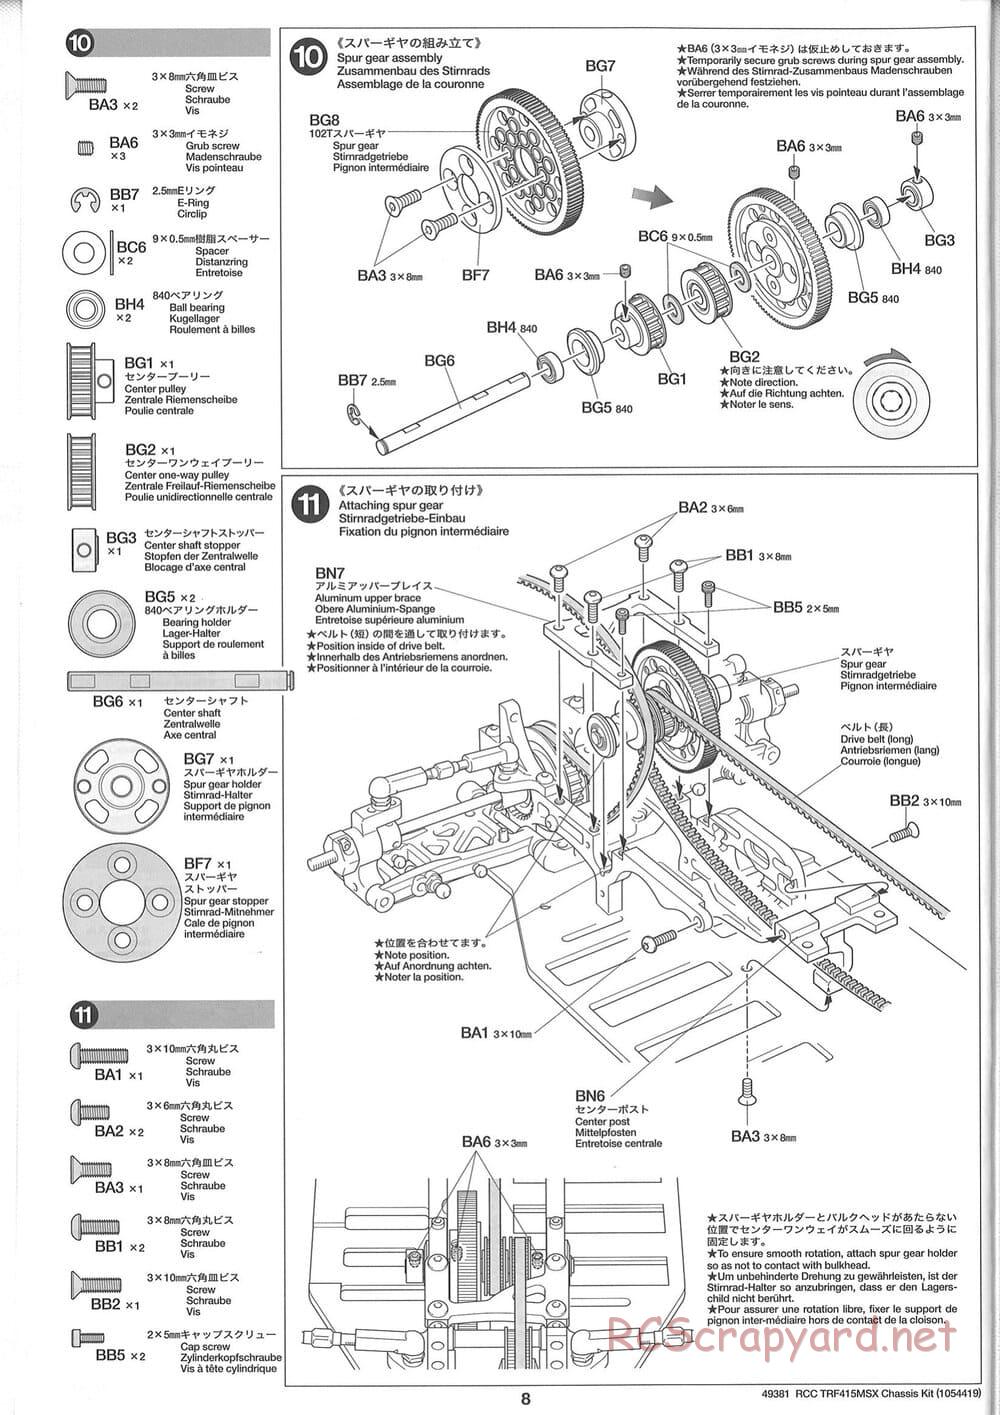 Tamiya - TRF415-MSX Chassis - Manual - Page 8